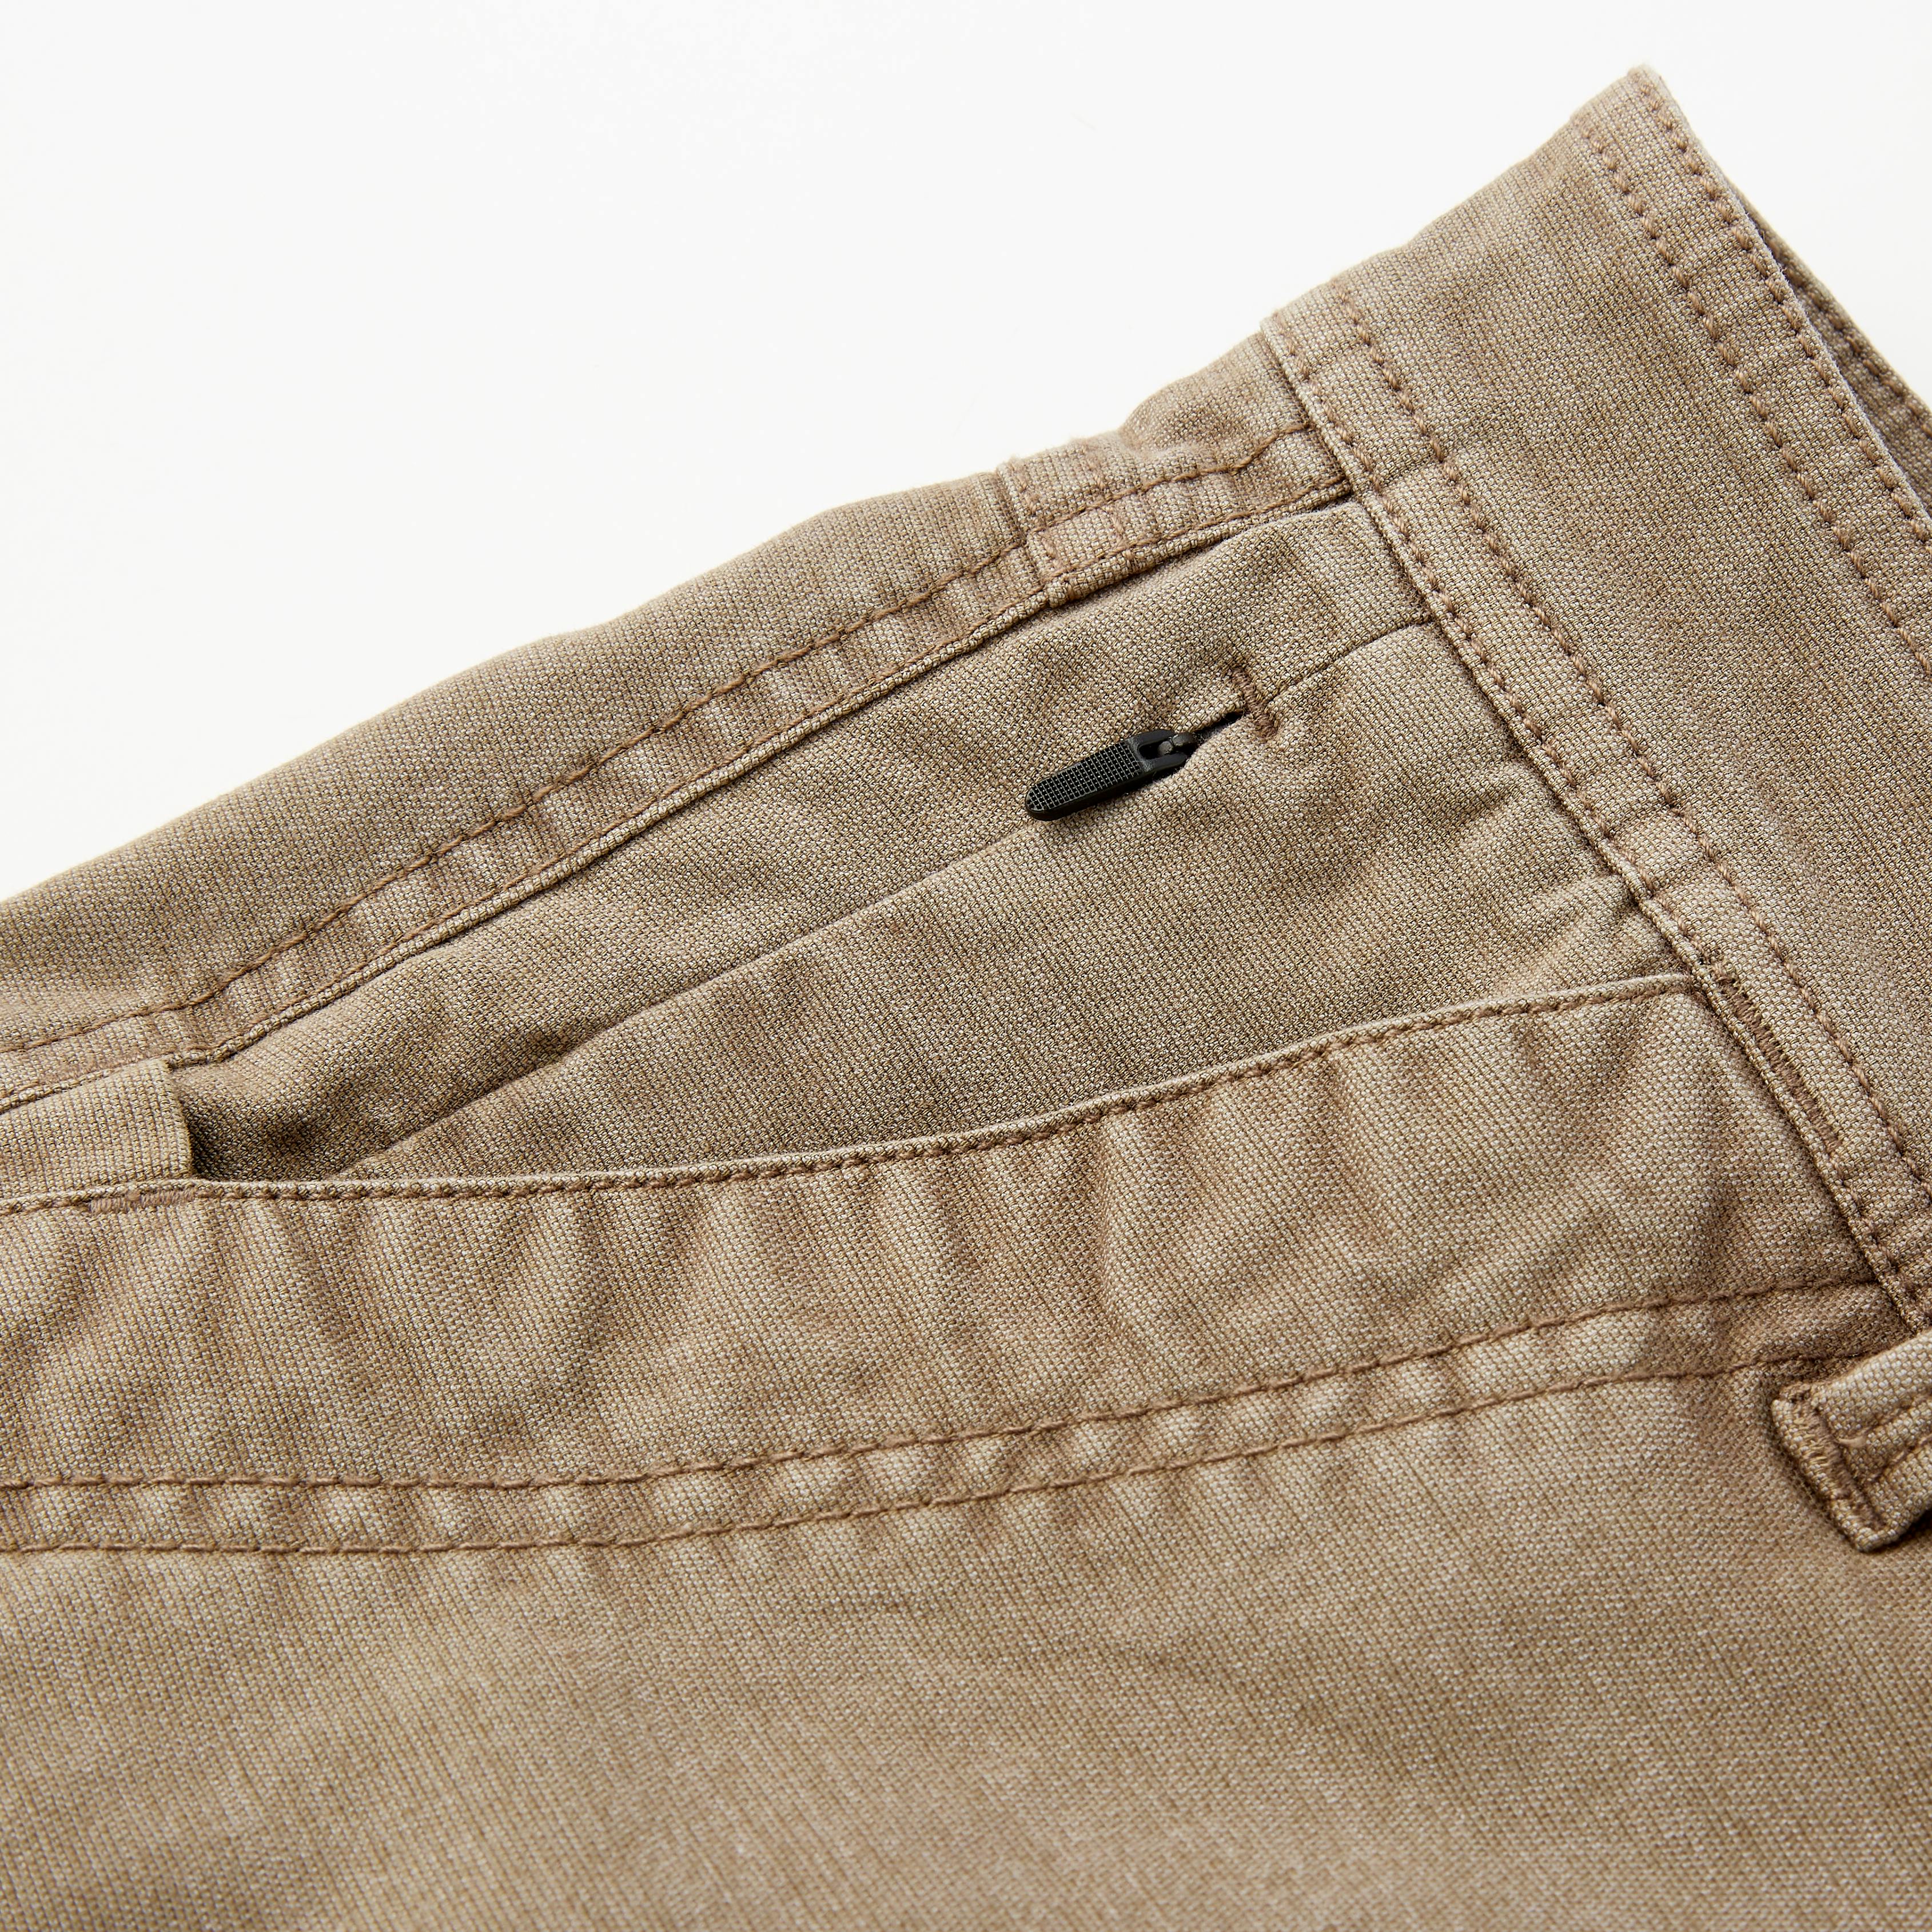 Rover 5 Pocket Lean Pant  Pocket pants, Travel pants, Pants